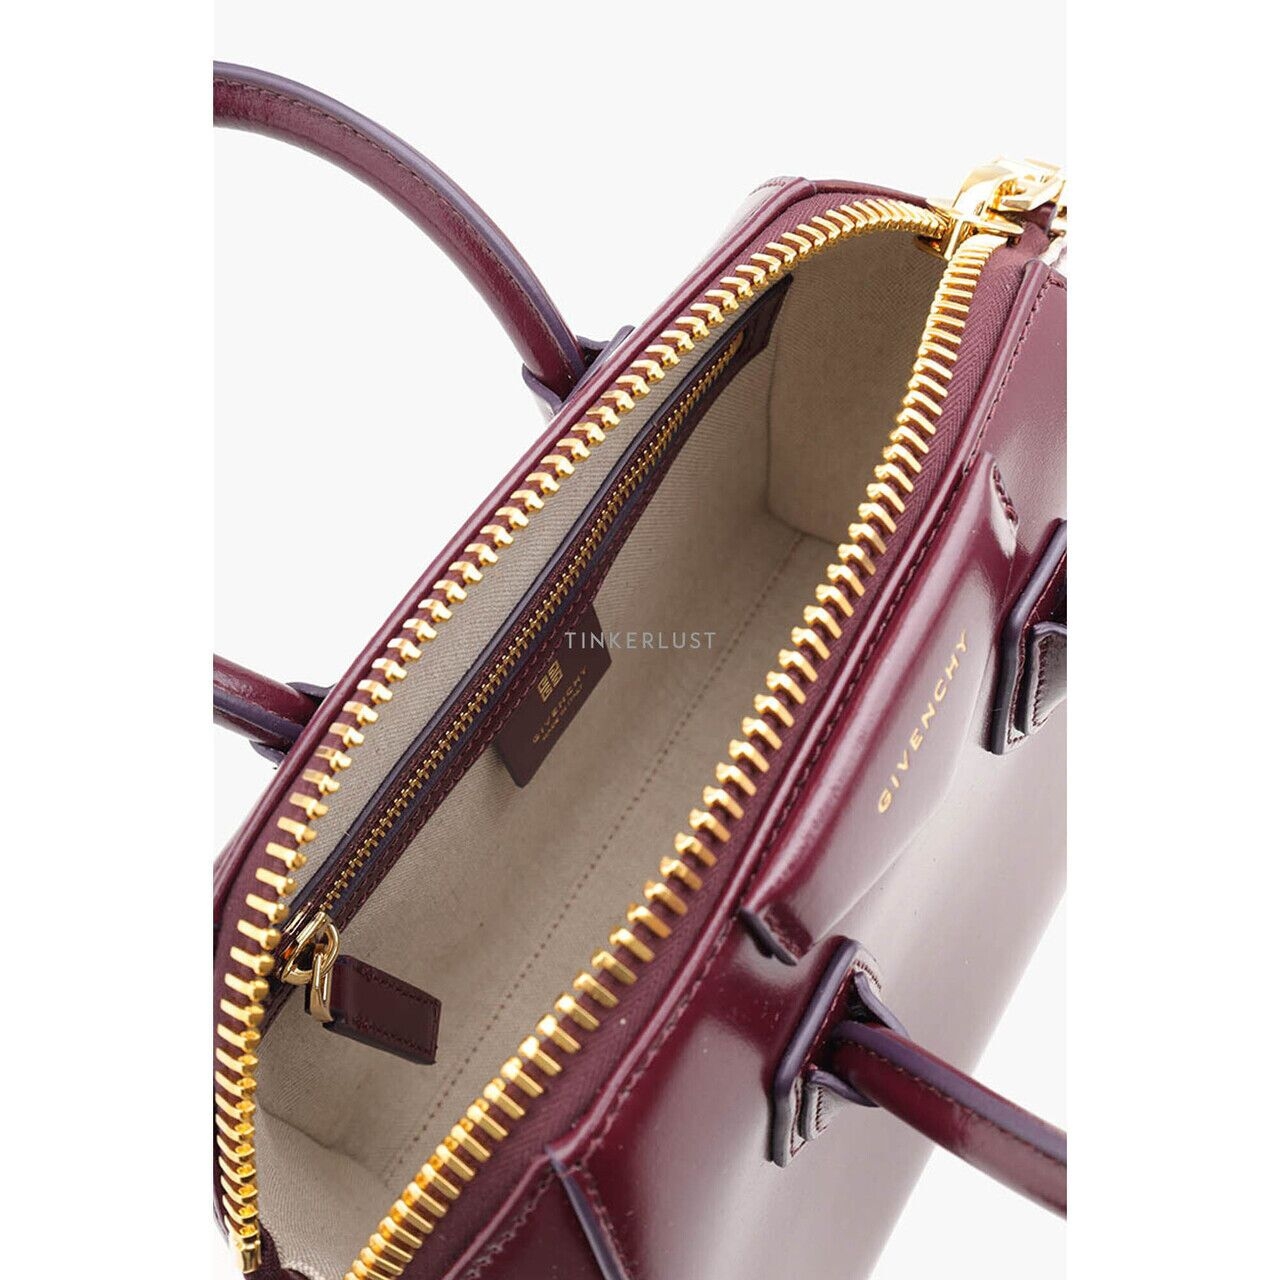 Givency Mini Antigona in Oxblood Red Box Calfskin Leather Satchel Bag